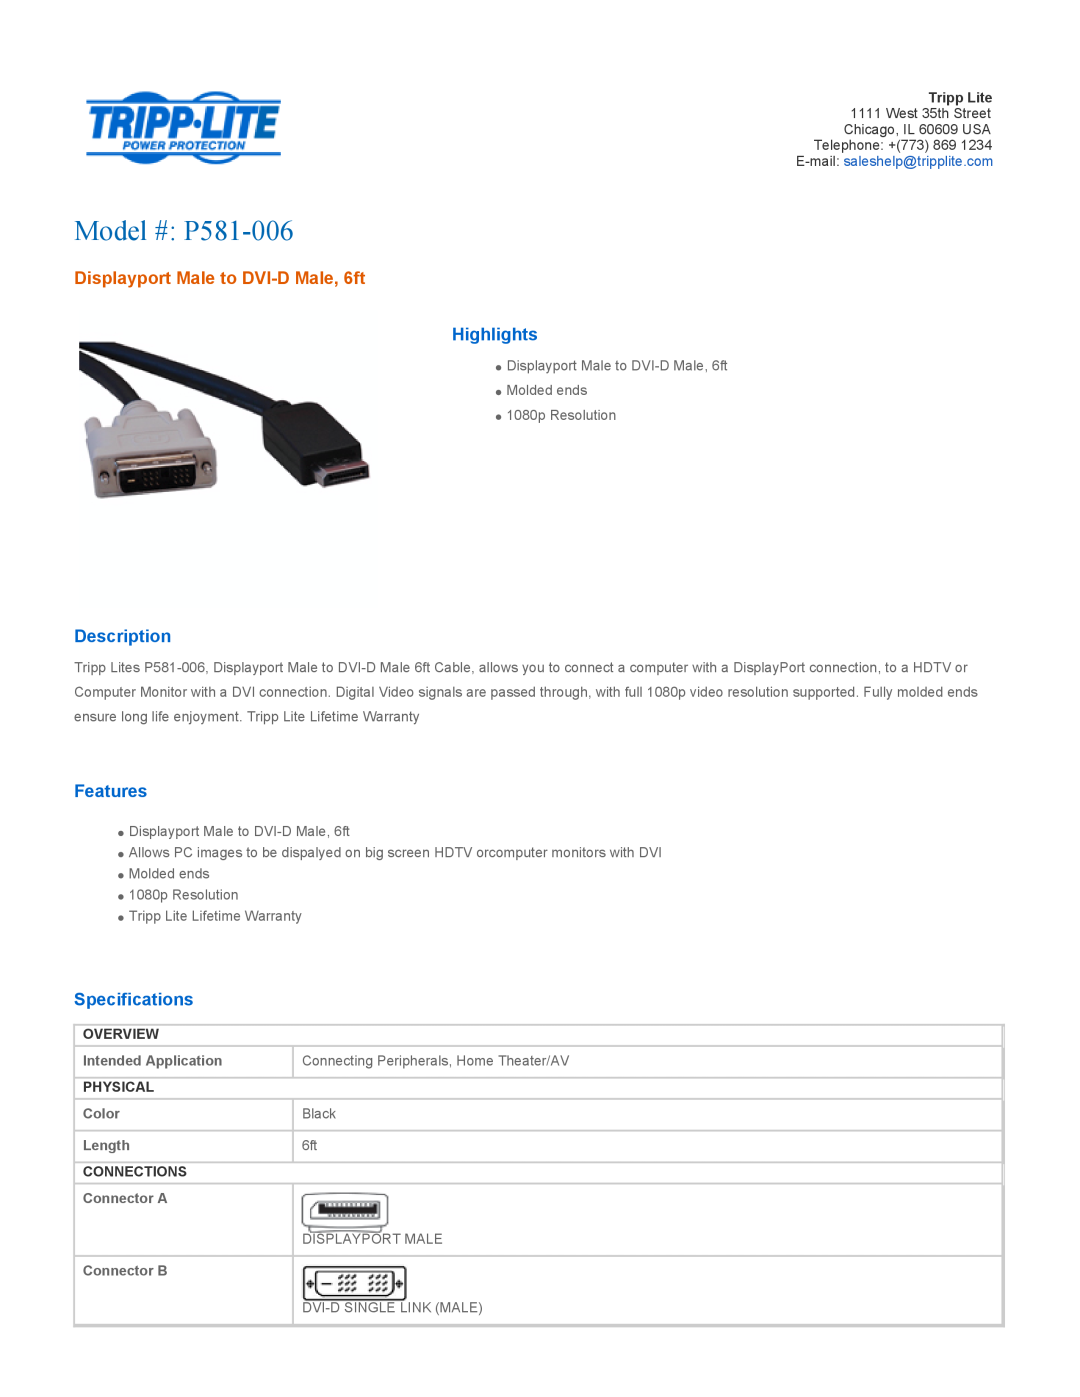 Tripp Lite specifications Model # P581-006, Displayport Male to DVI-D Male, 6ft, Highlights, Description, Features 